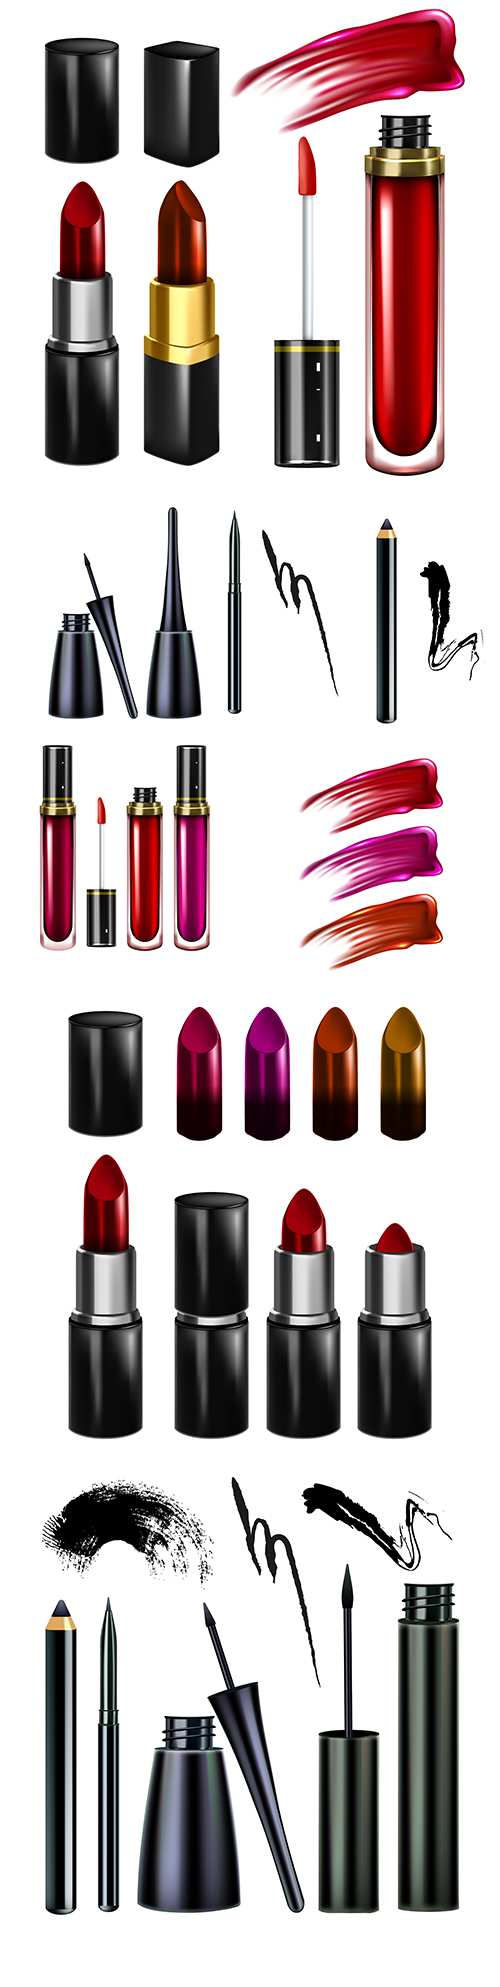 Lipstick and mascara cosmetics make-up realistic 3d illustrations
